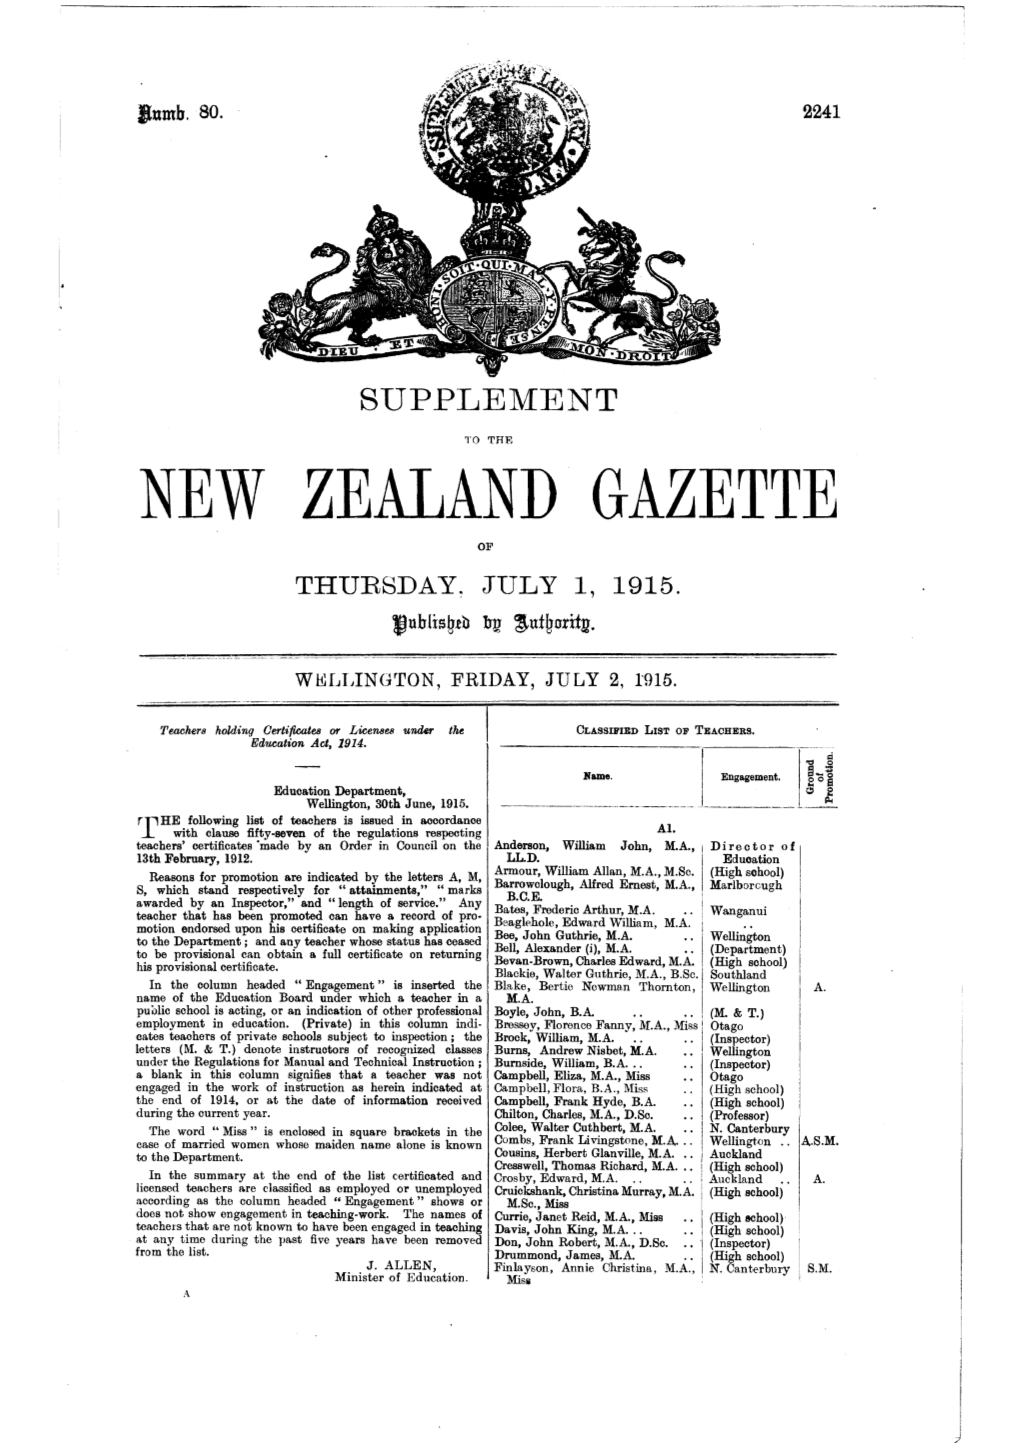 New Zealand Gazette of Thursday, July 1, 1915